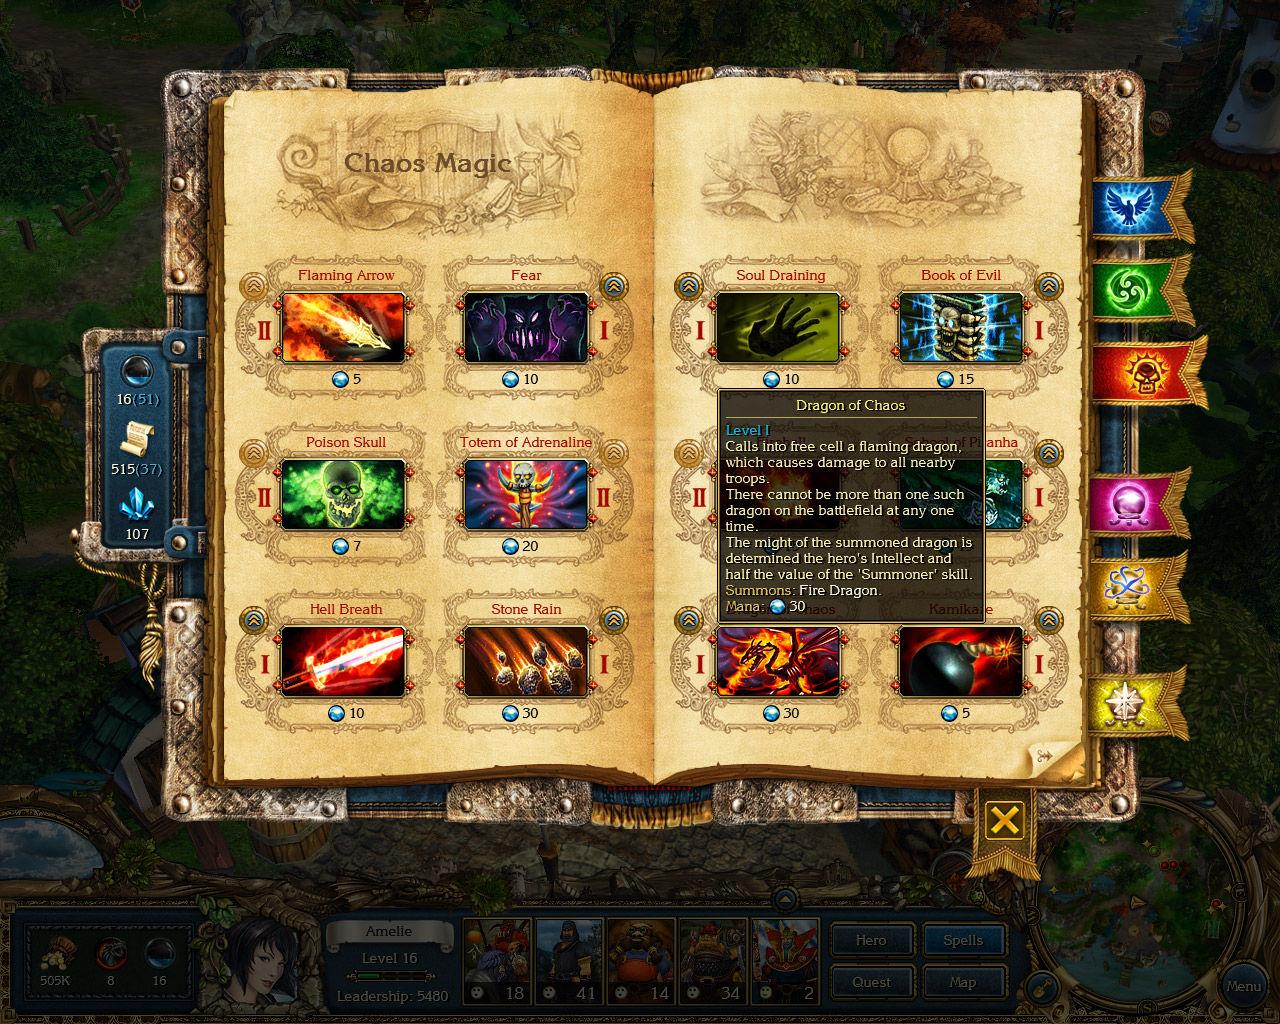 Screenshot №6 from game King's Bounty: Crossworlds